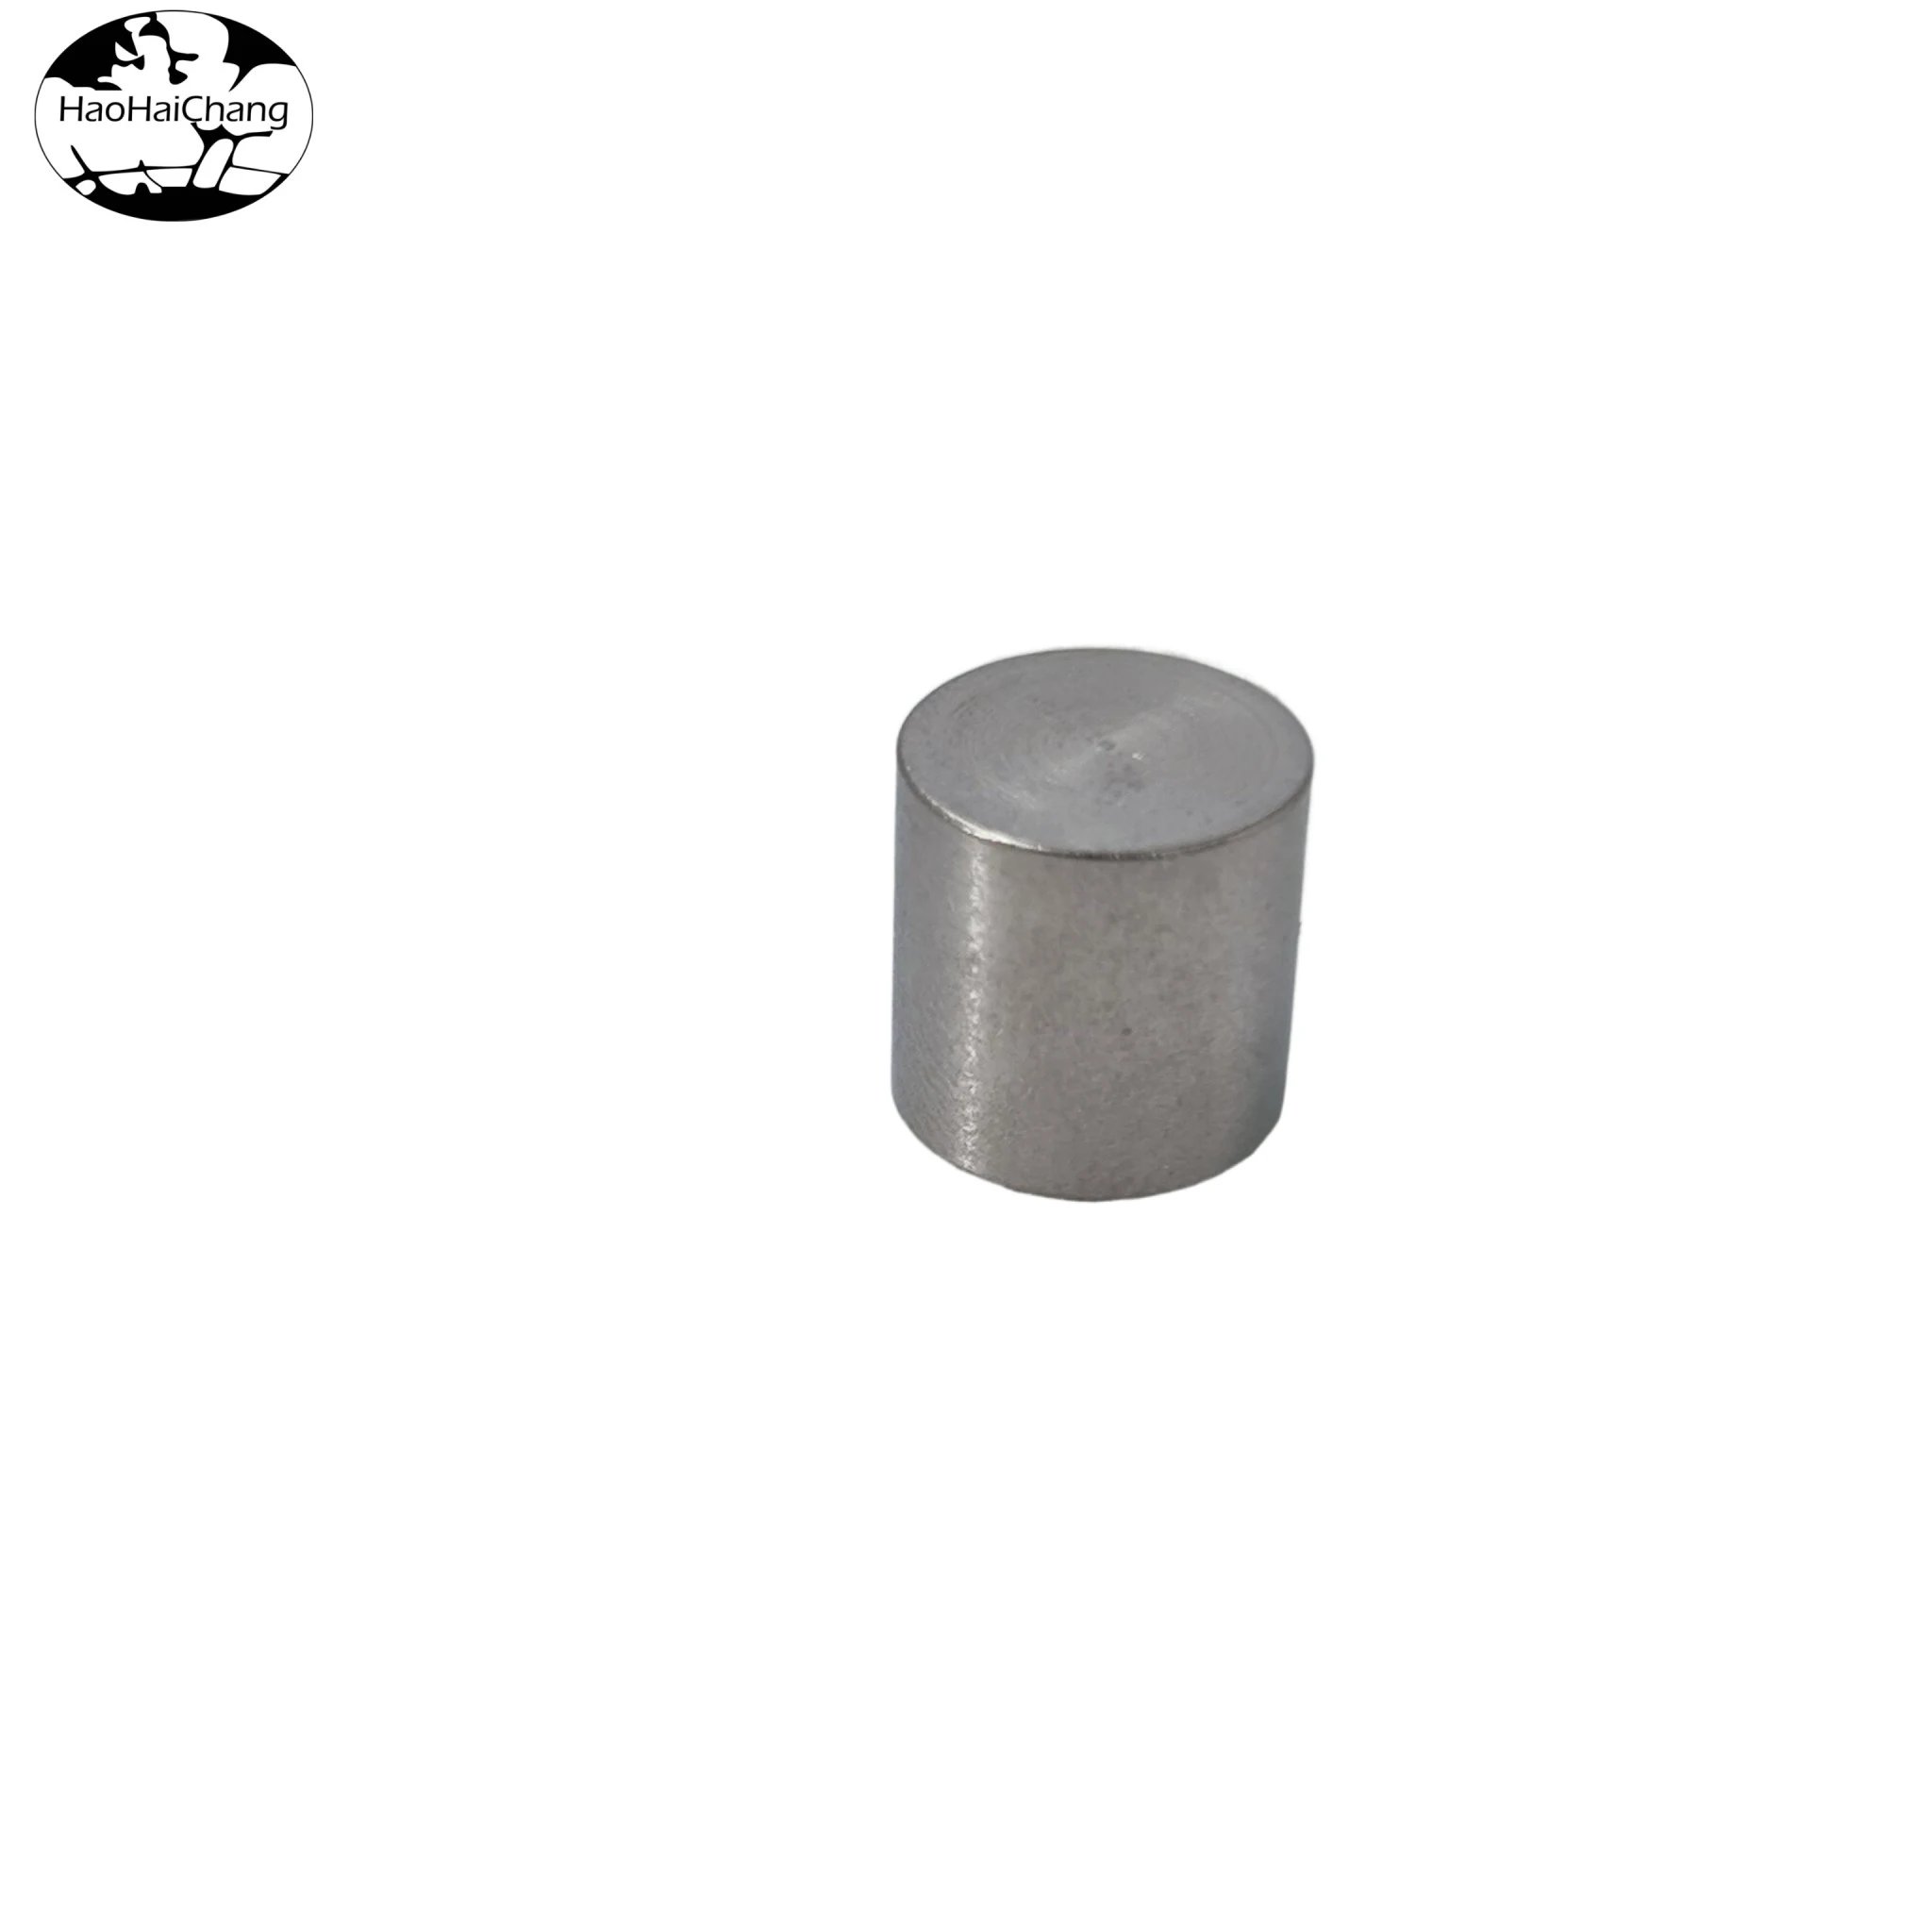 HHC-455 Cylindrical Single-Head Nut Stainless Steel M6 Internal Thread Headless Stud